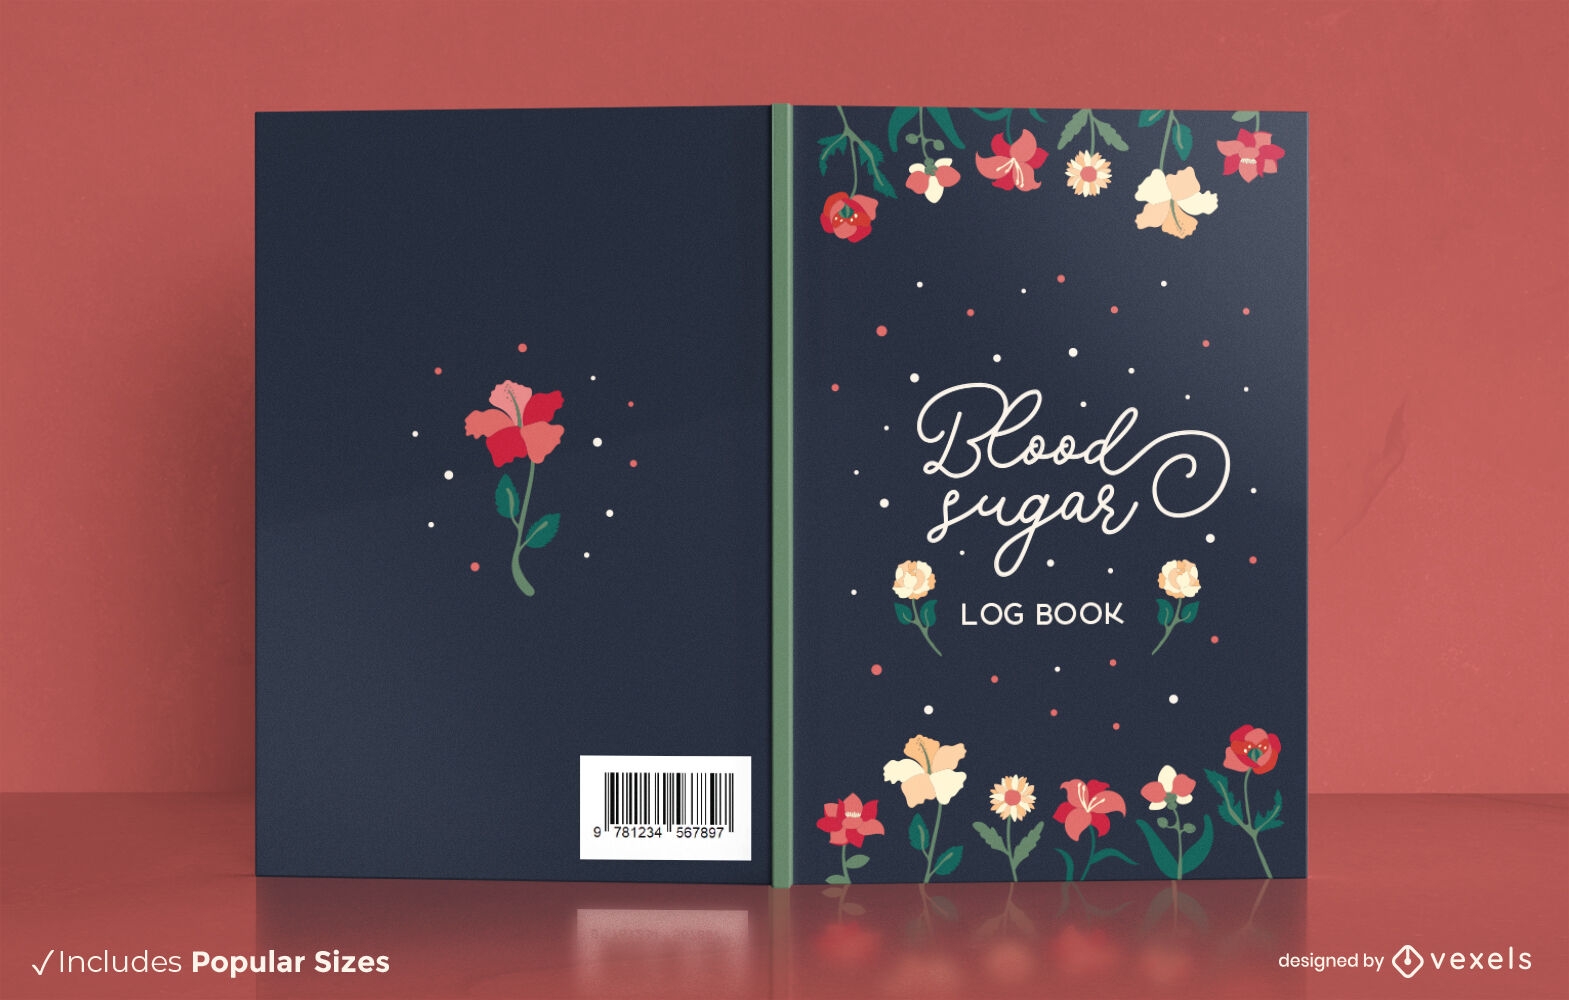 Blood sugar log book cover design